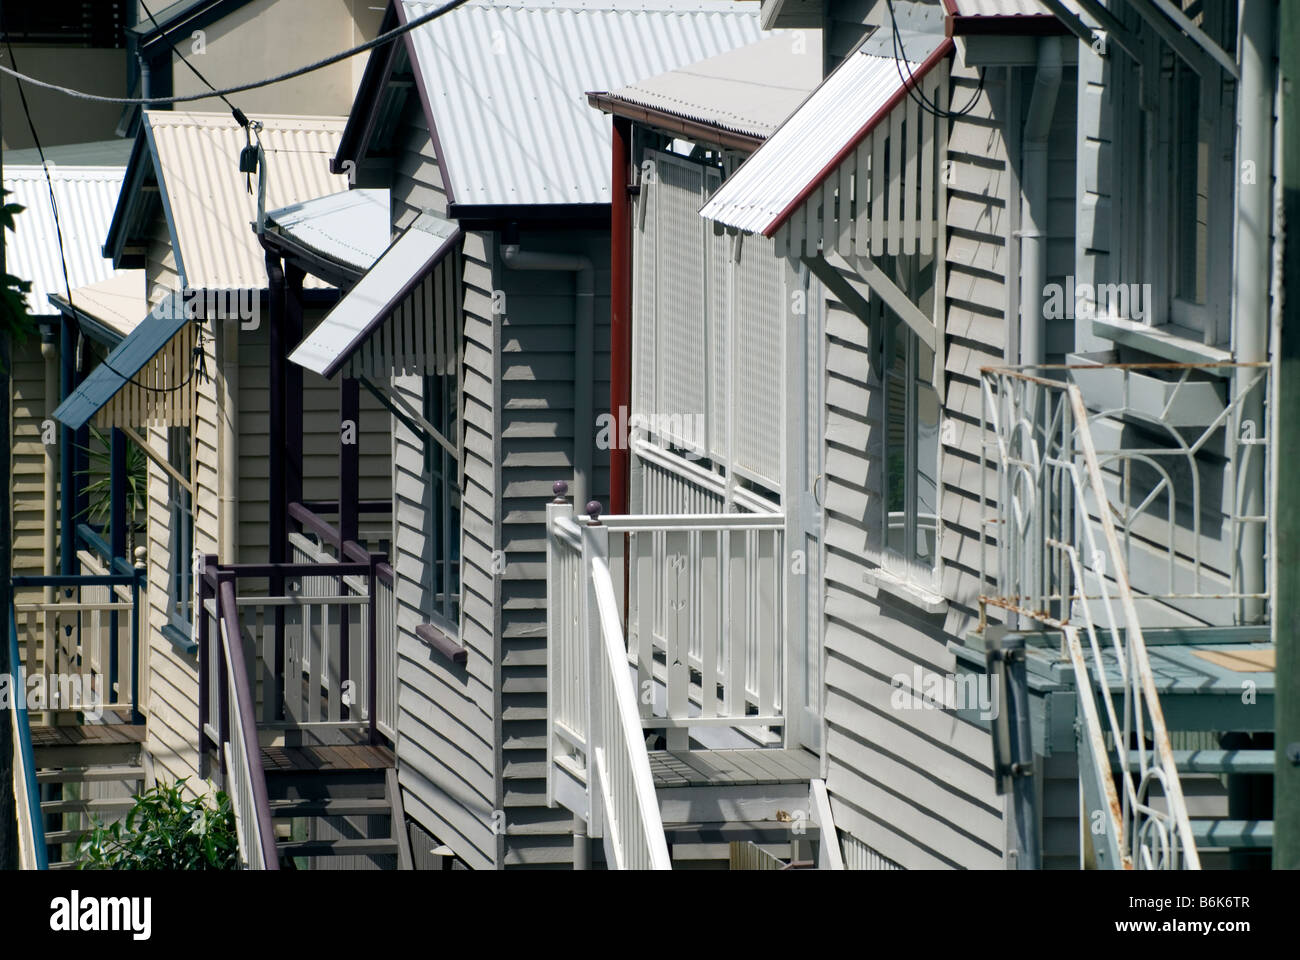 Queenslander houses in Spring Hill, Brisbane, Australia Stock Photo